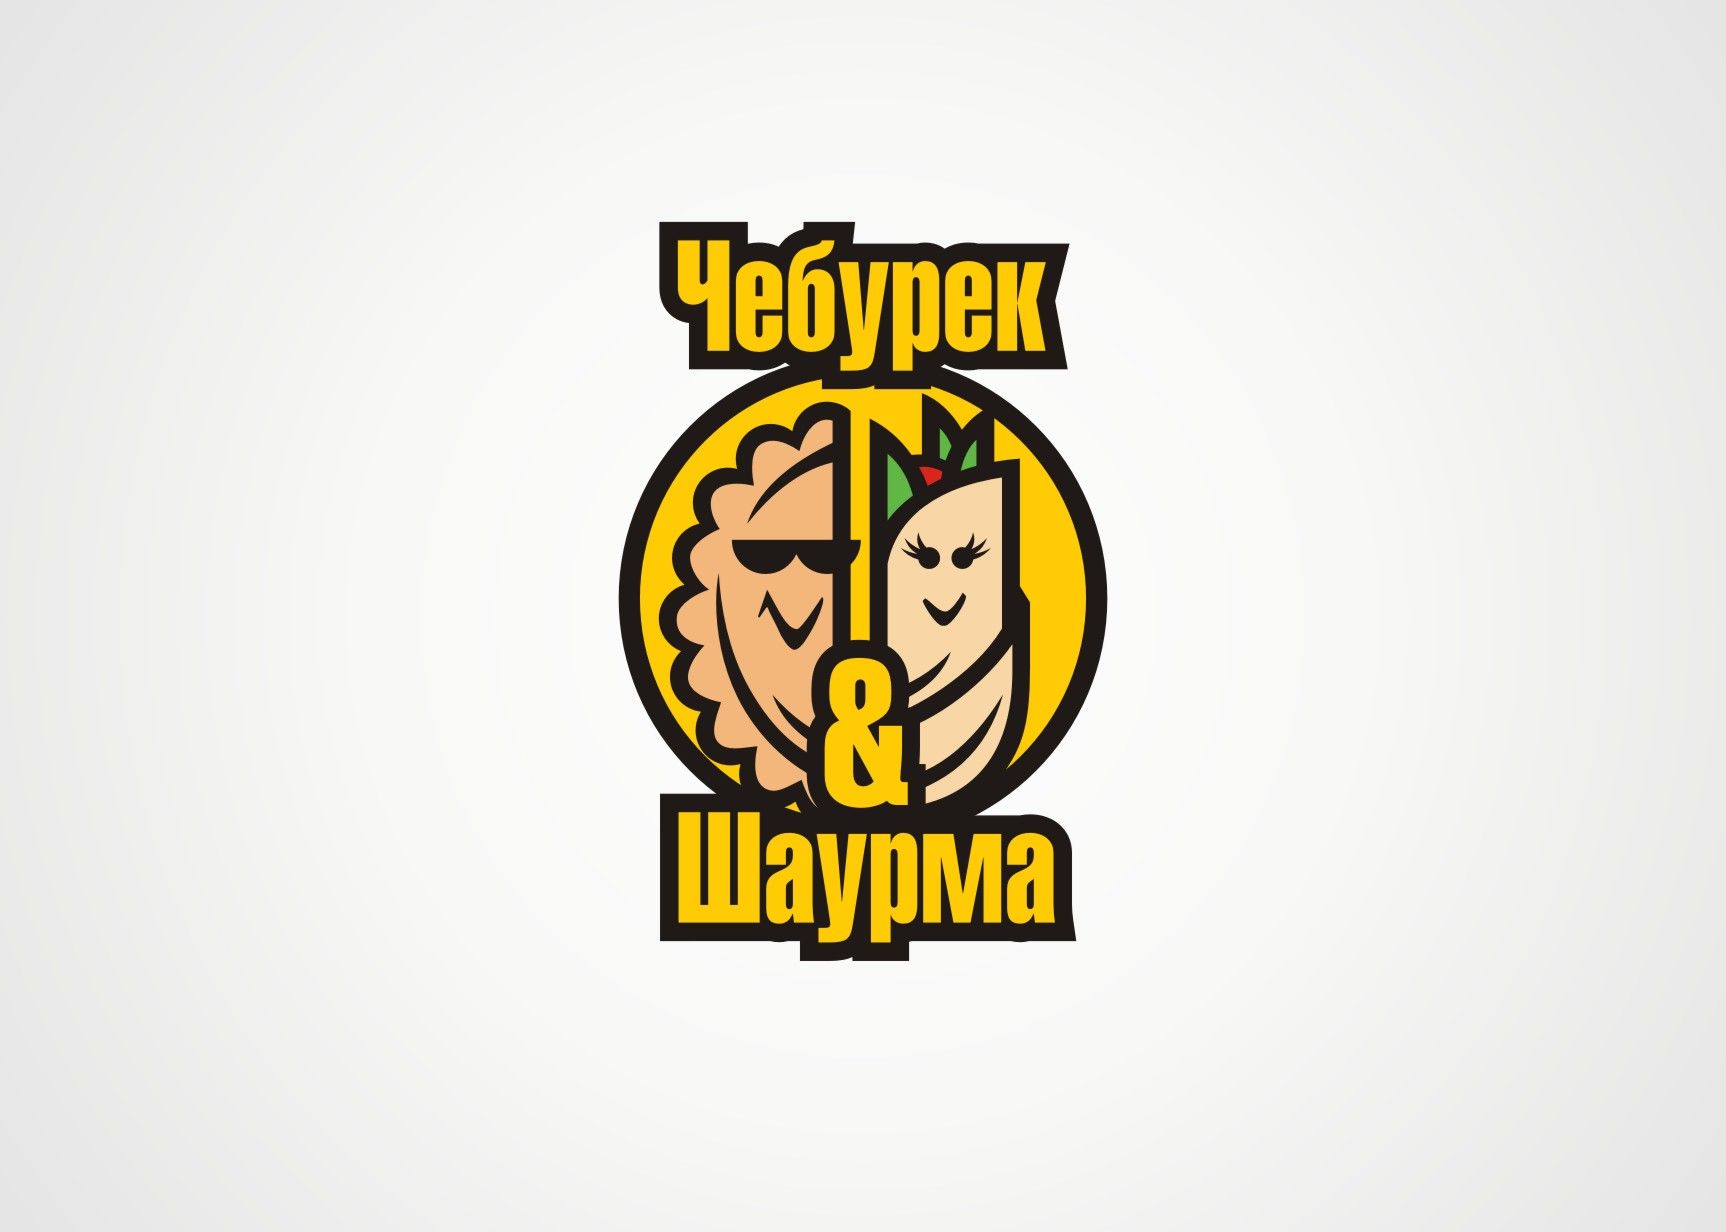 Логотип для Чебурек & Шаурма  - дизайнер Zheravin